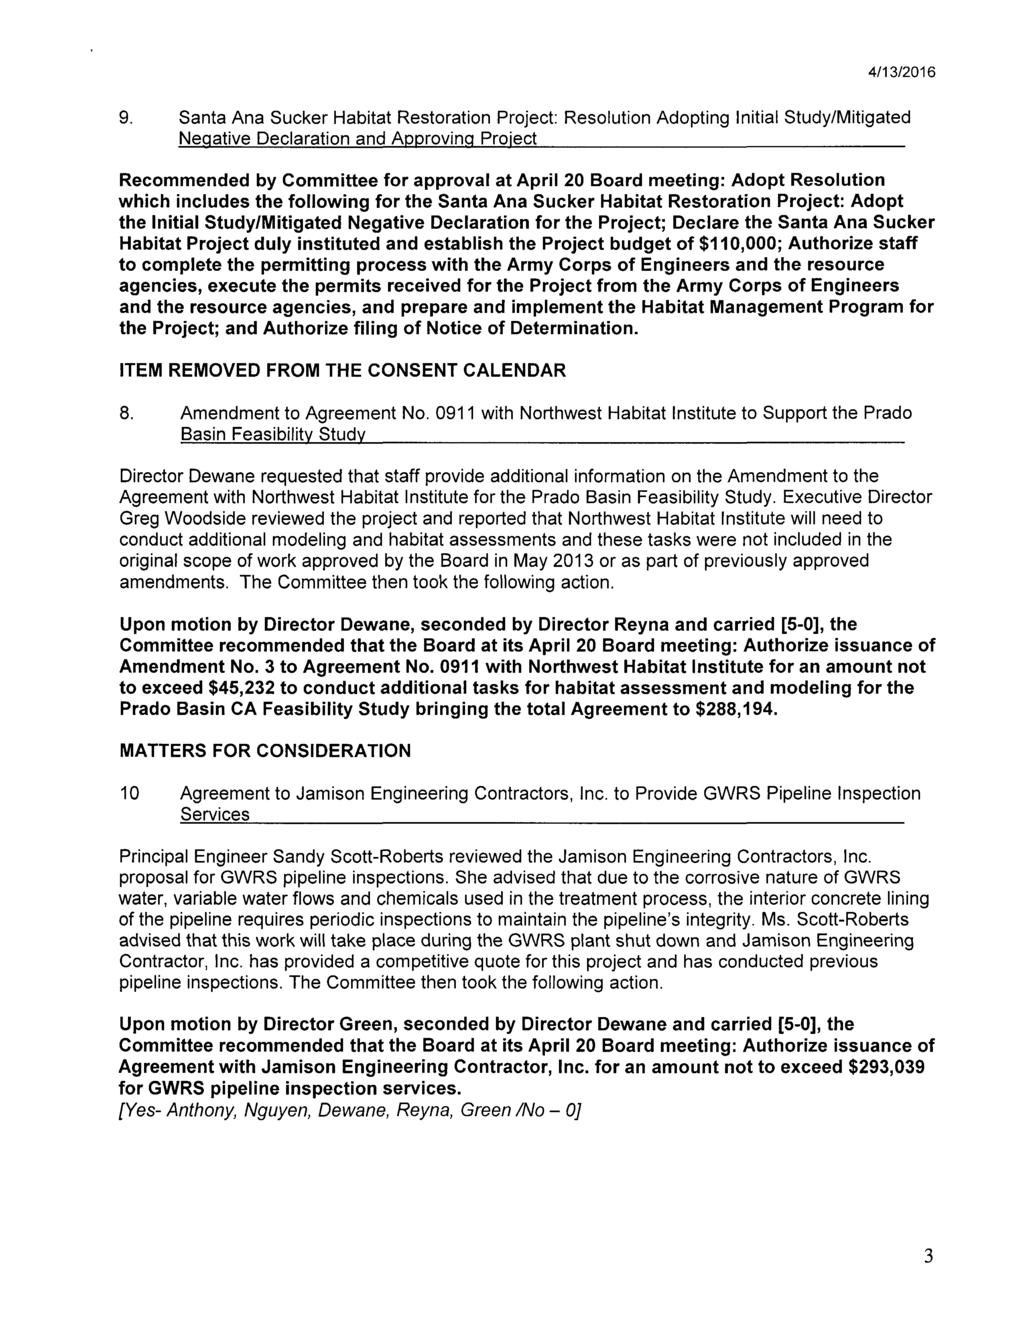 Santa Ana Sucker Habitat Restoration Project: Resolution Adopting Initial Study/Mitigated Ne.qative Declaration and Approvin.